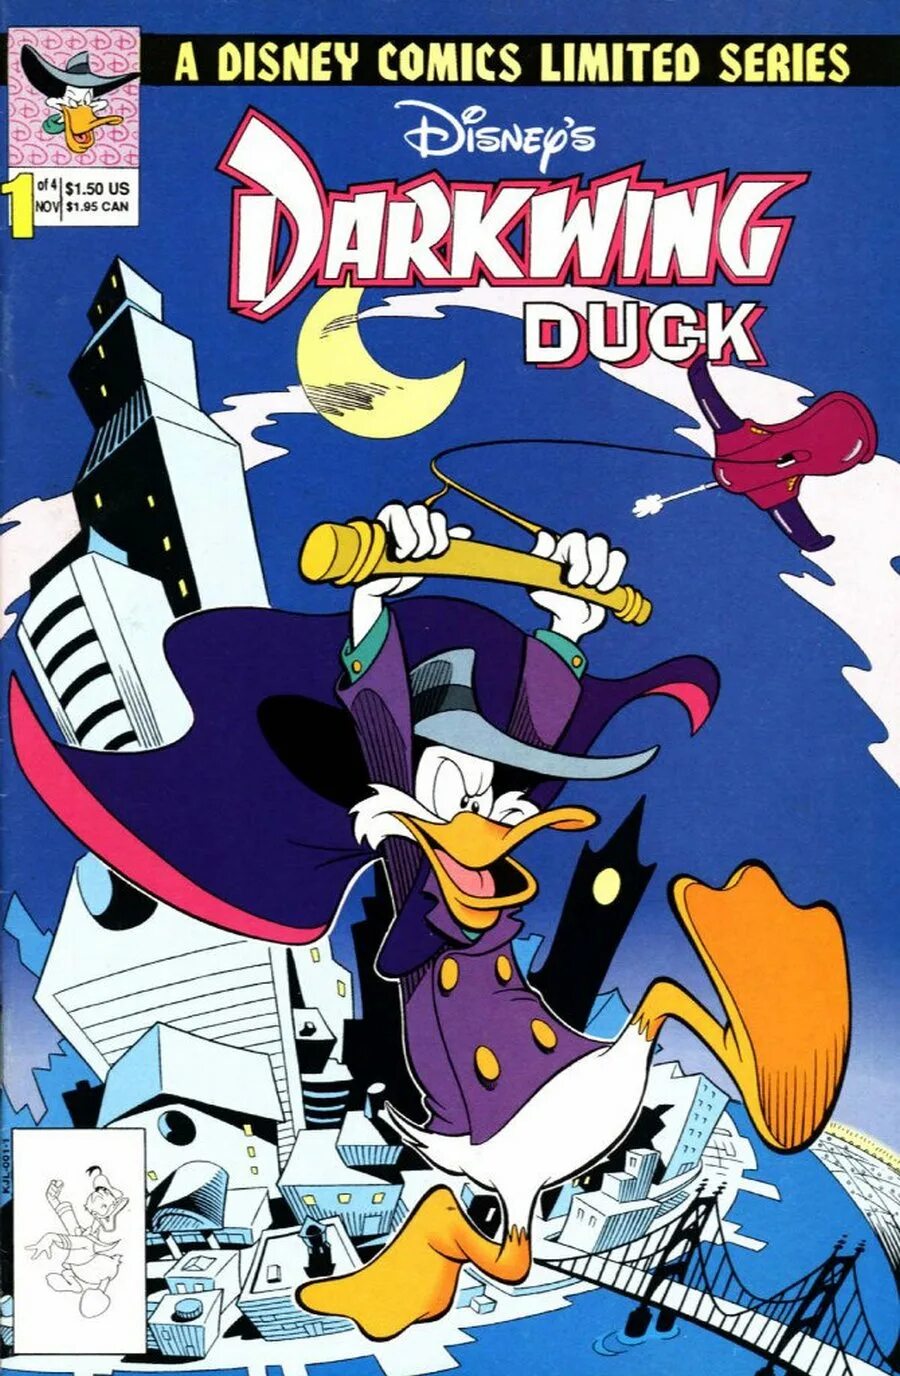 Darkwing Duck комиксы 1991. Черный плащ Darkwing Duck. Черный плащ 1991. Черный плащ Дисней.